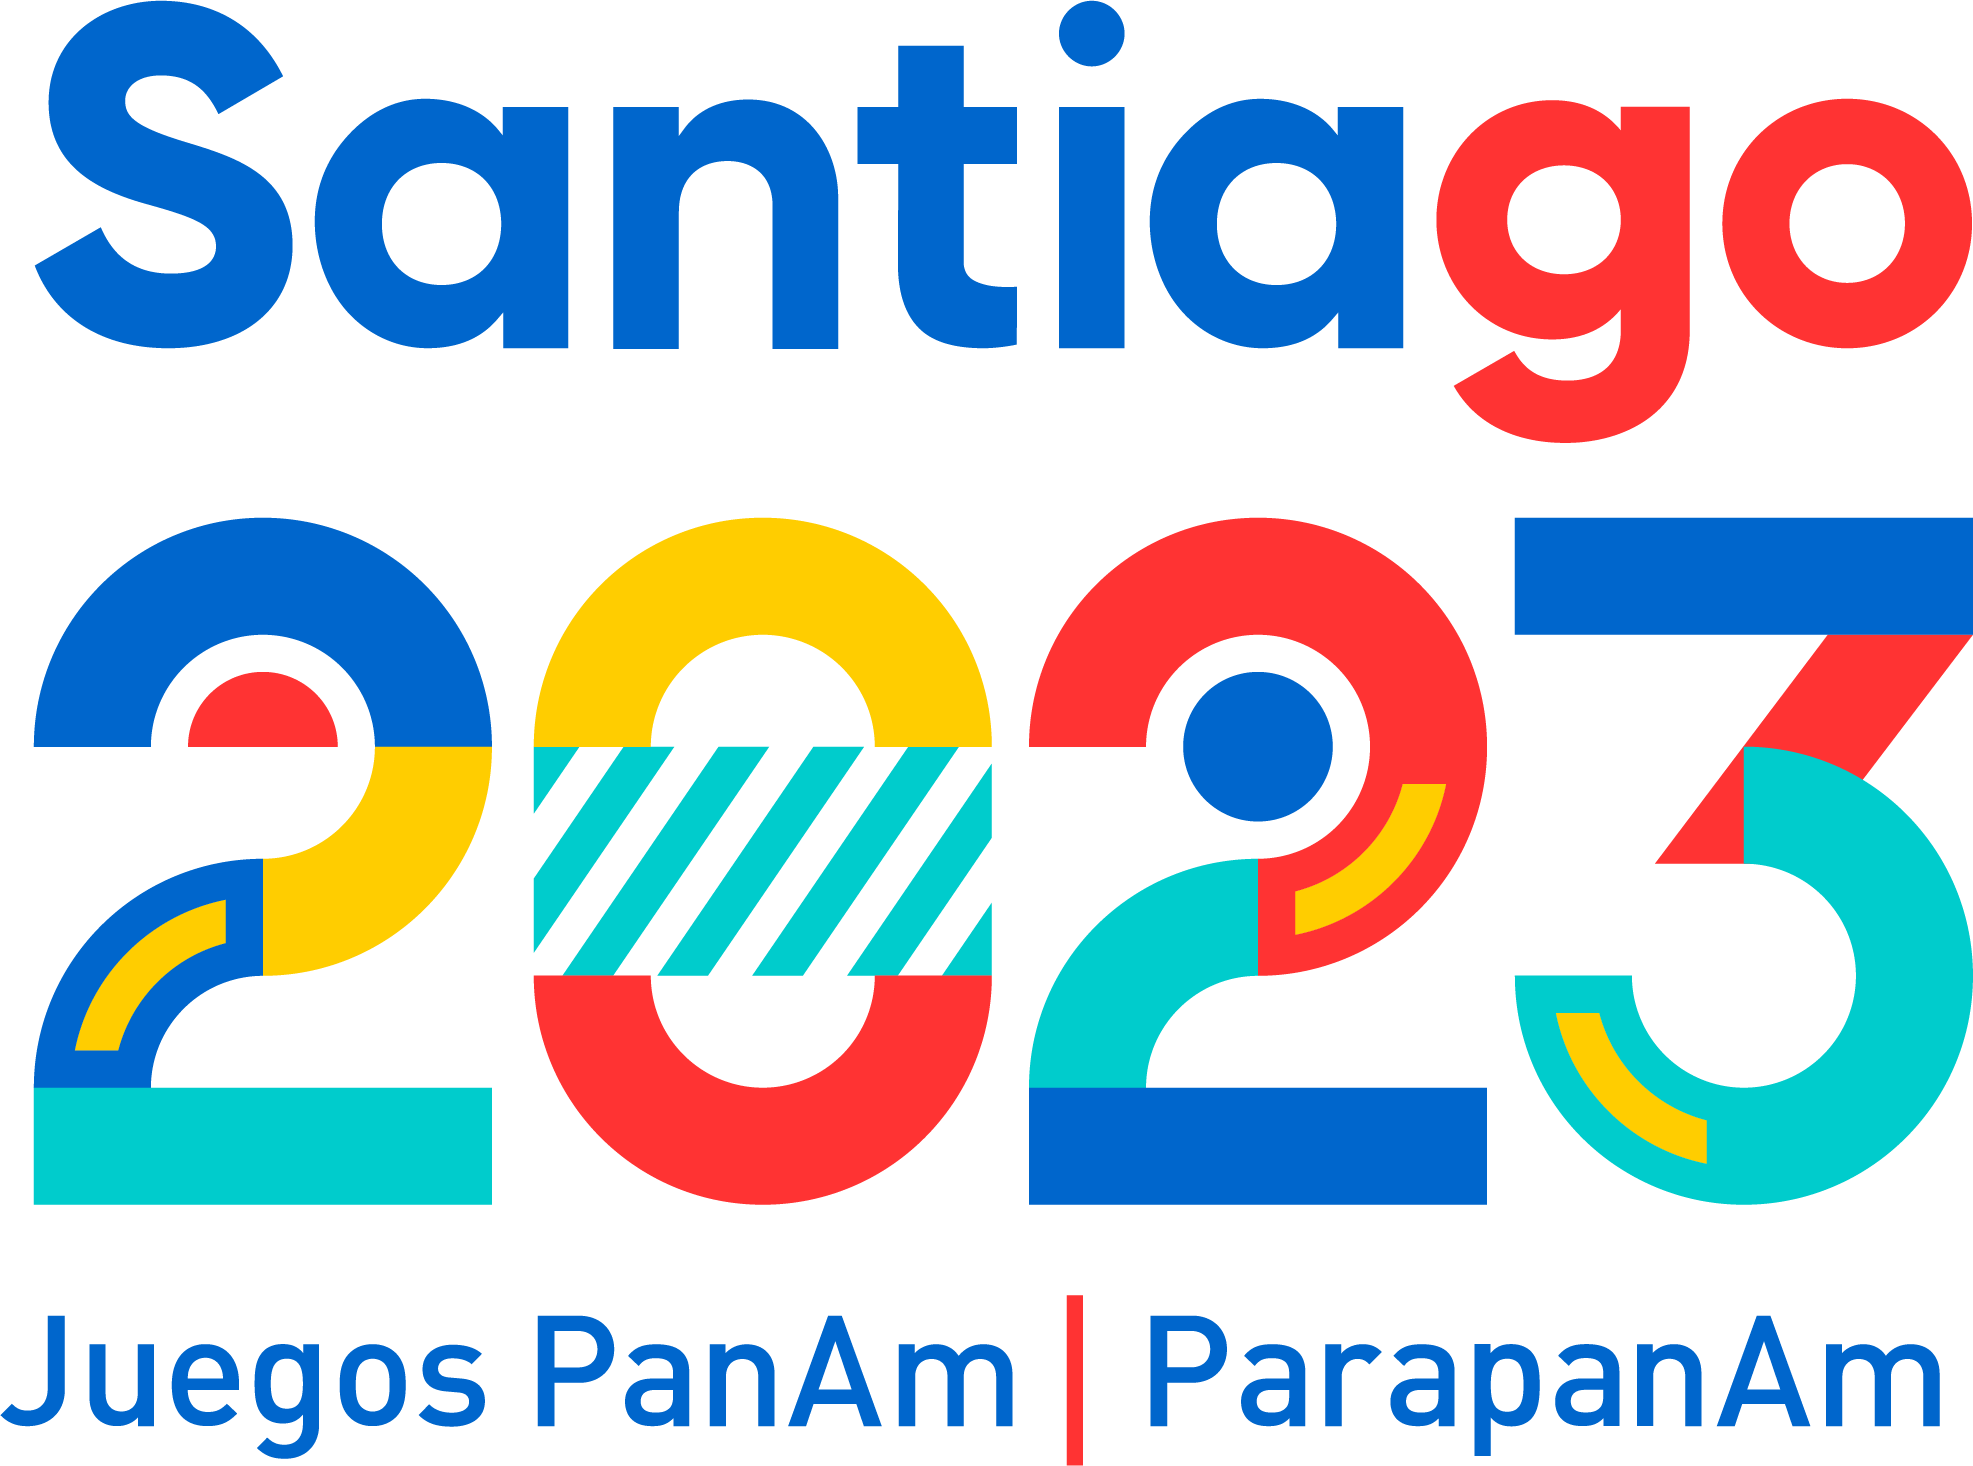 Santiago2023 